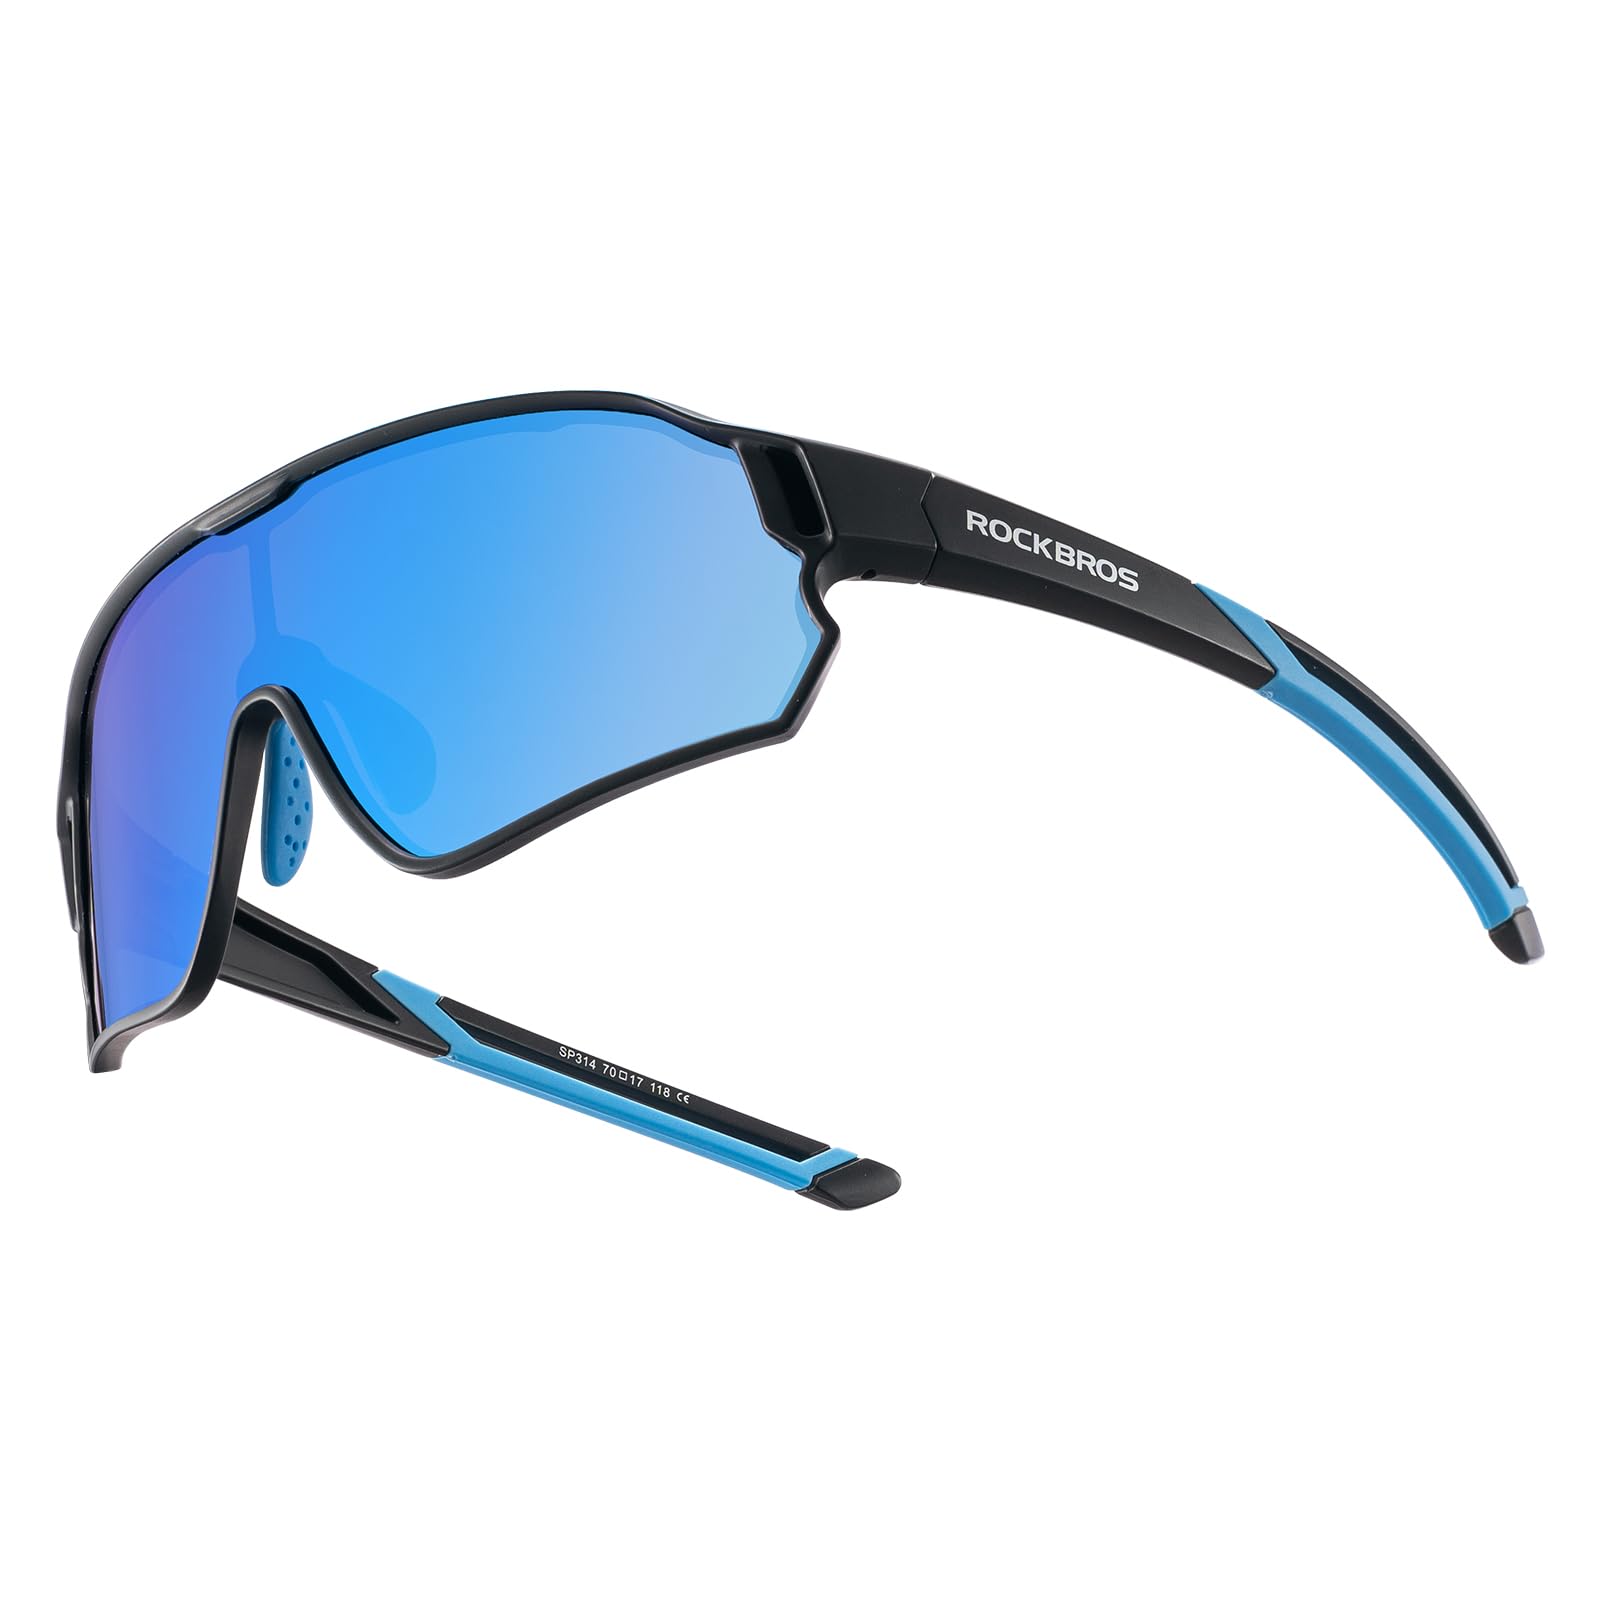 ROCKBROS Children's Cycling glasses UV400 Protection Sunglasses for Boys Girls #Color_Black